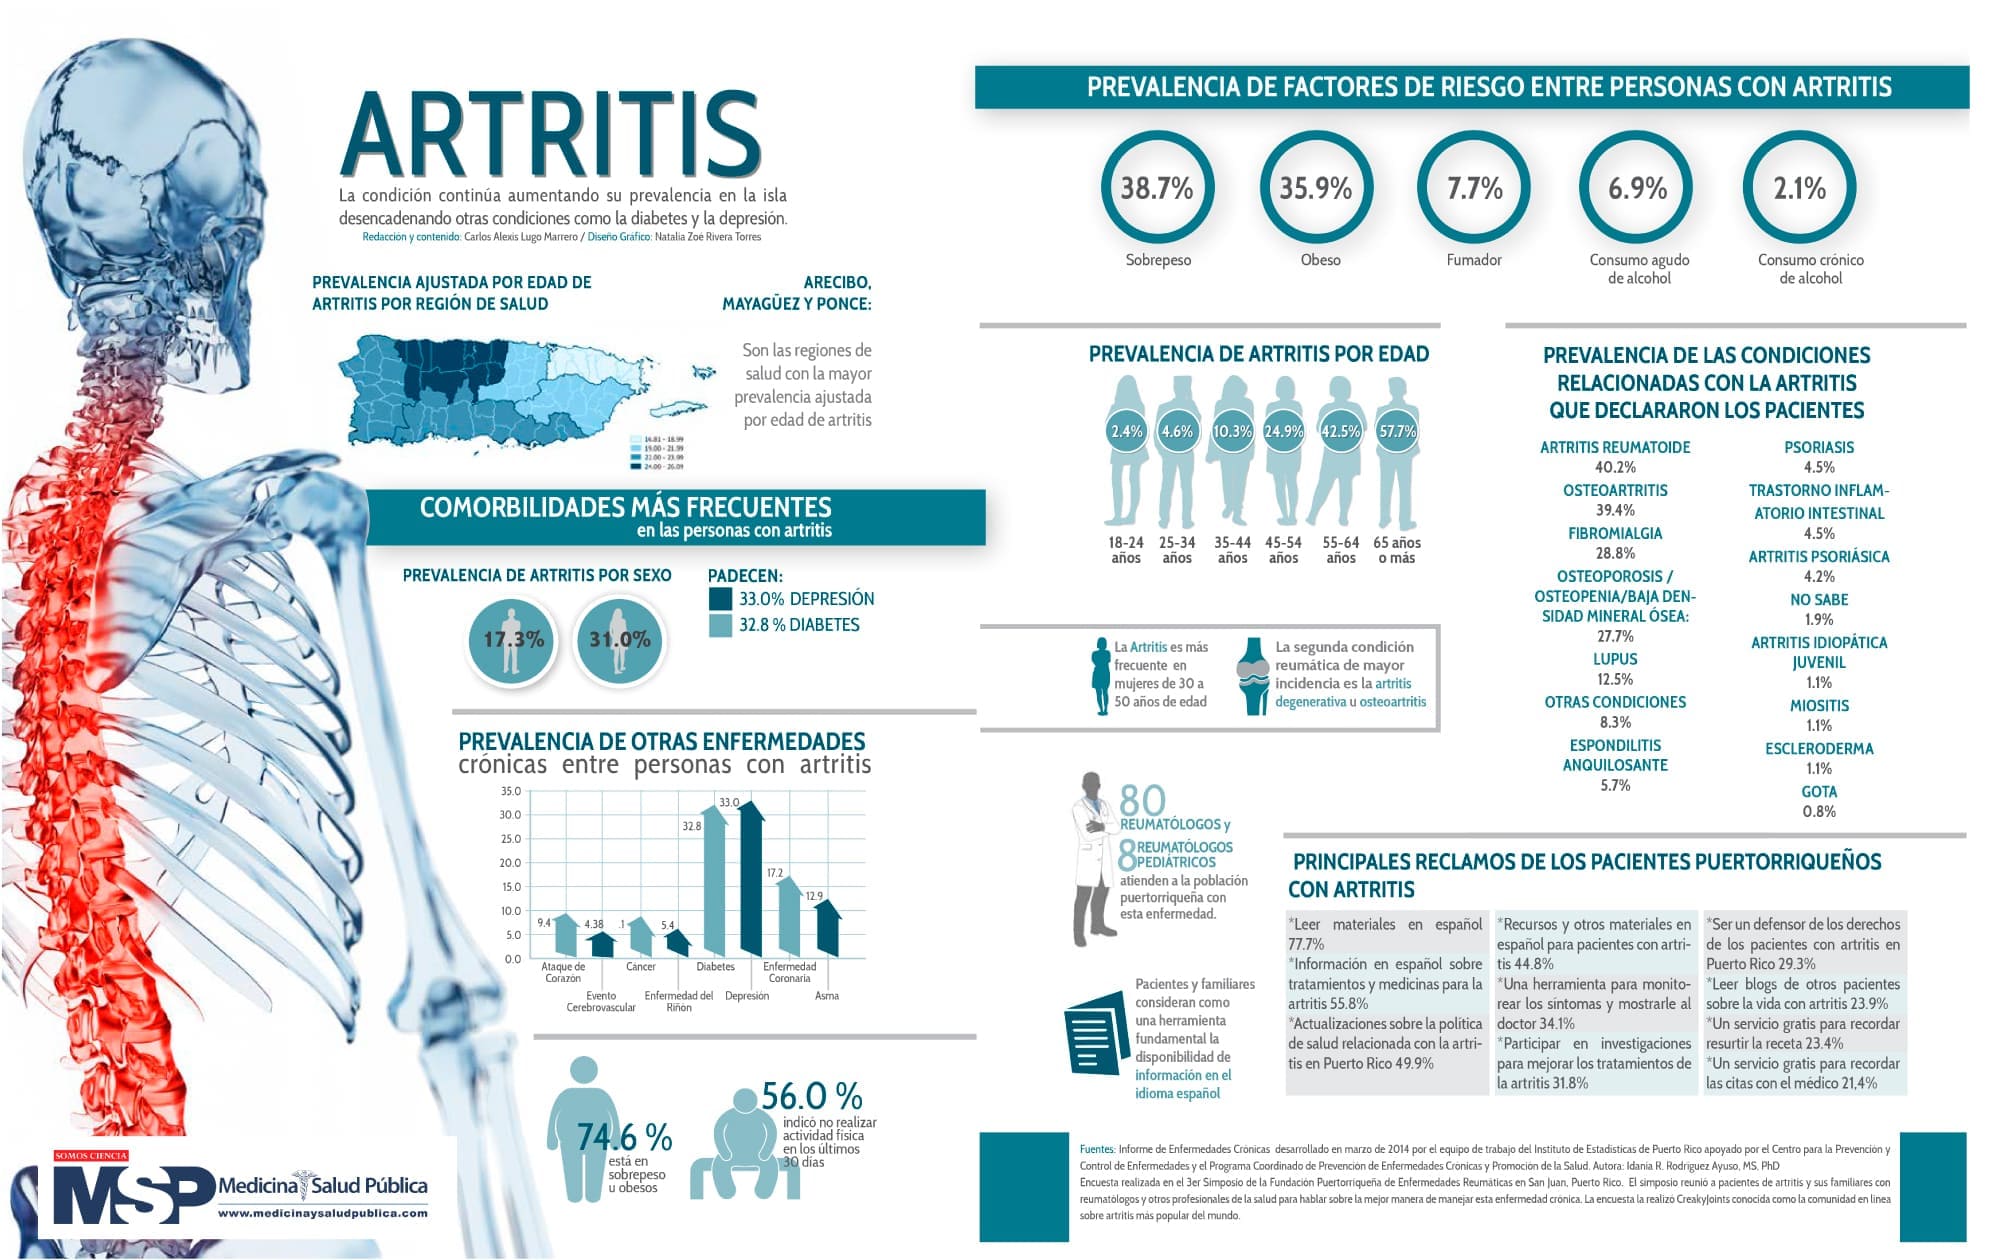 Testimonios de personas con artritis psoriásica